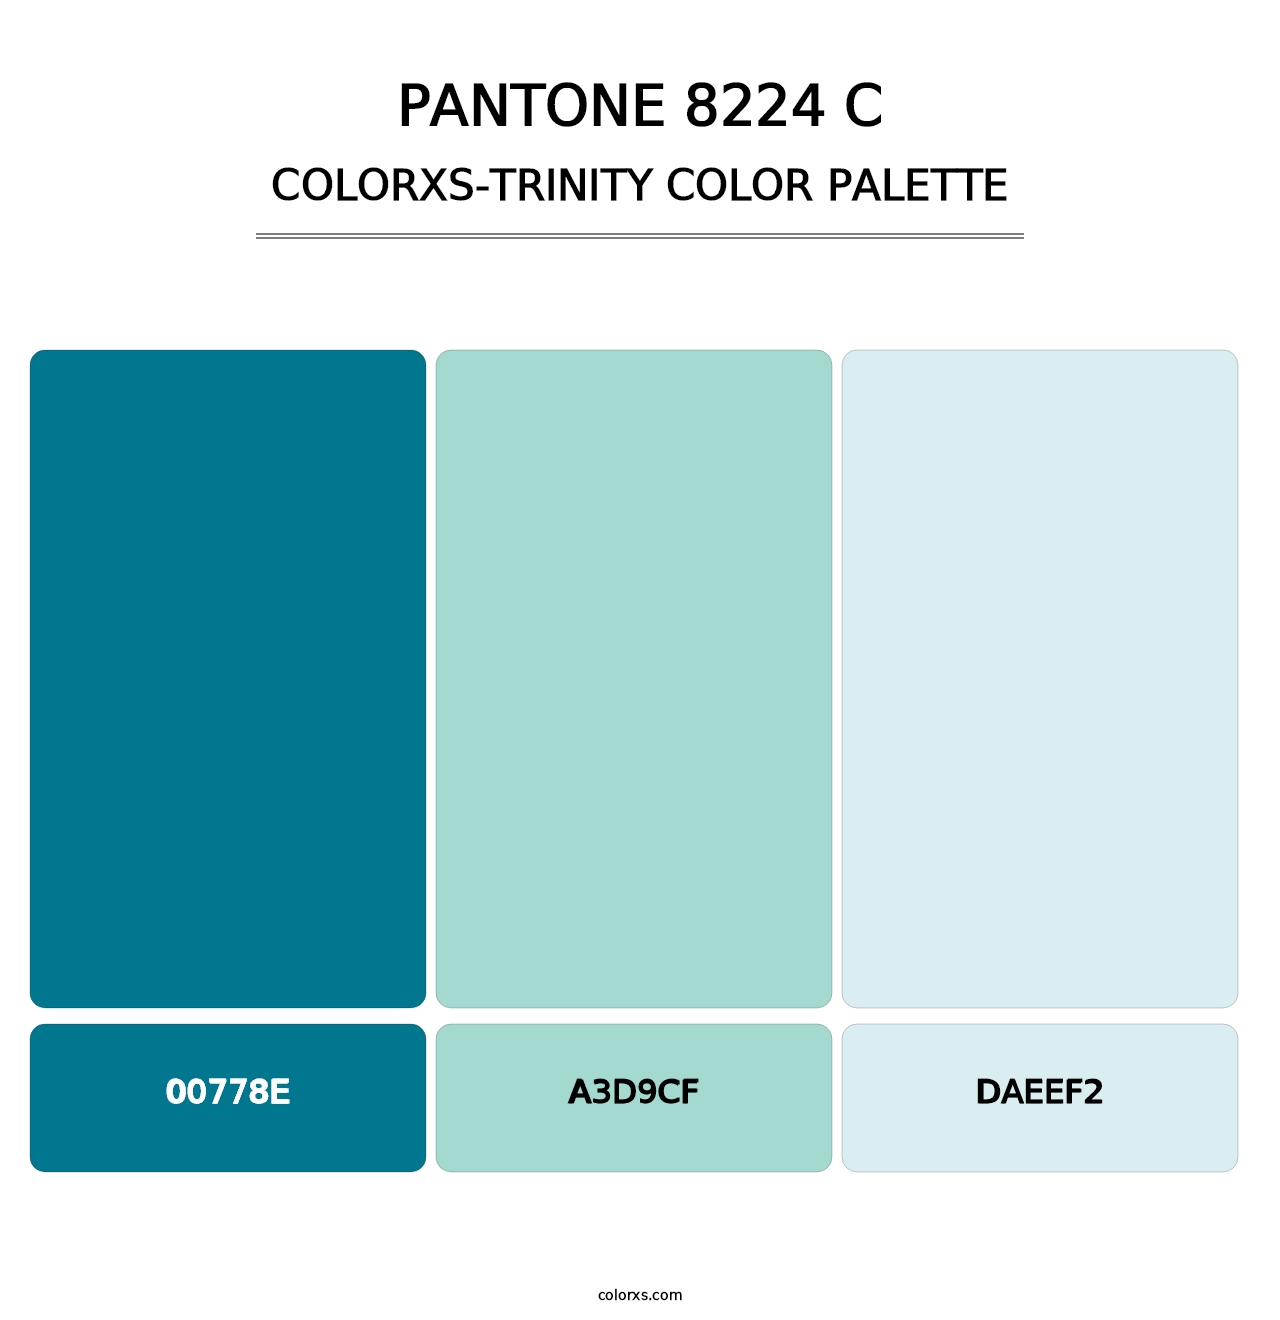 PANTONE 8224 C - Colorxs Trinity Palette